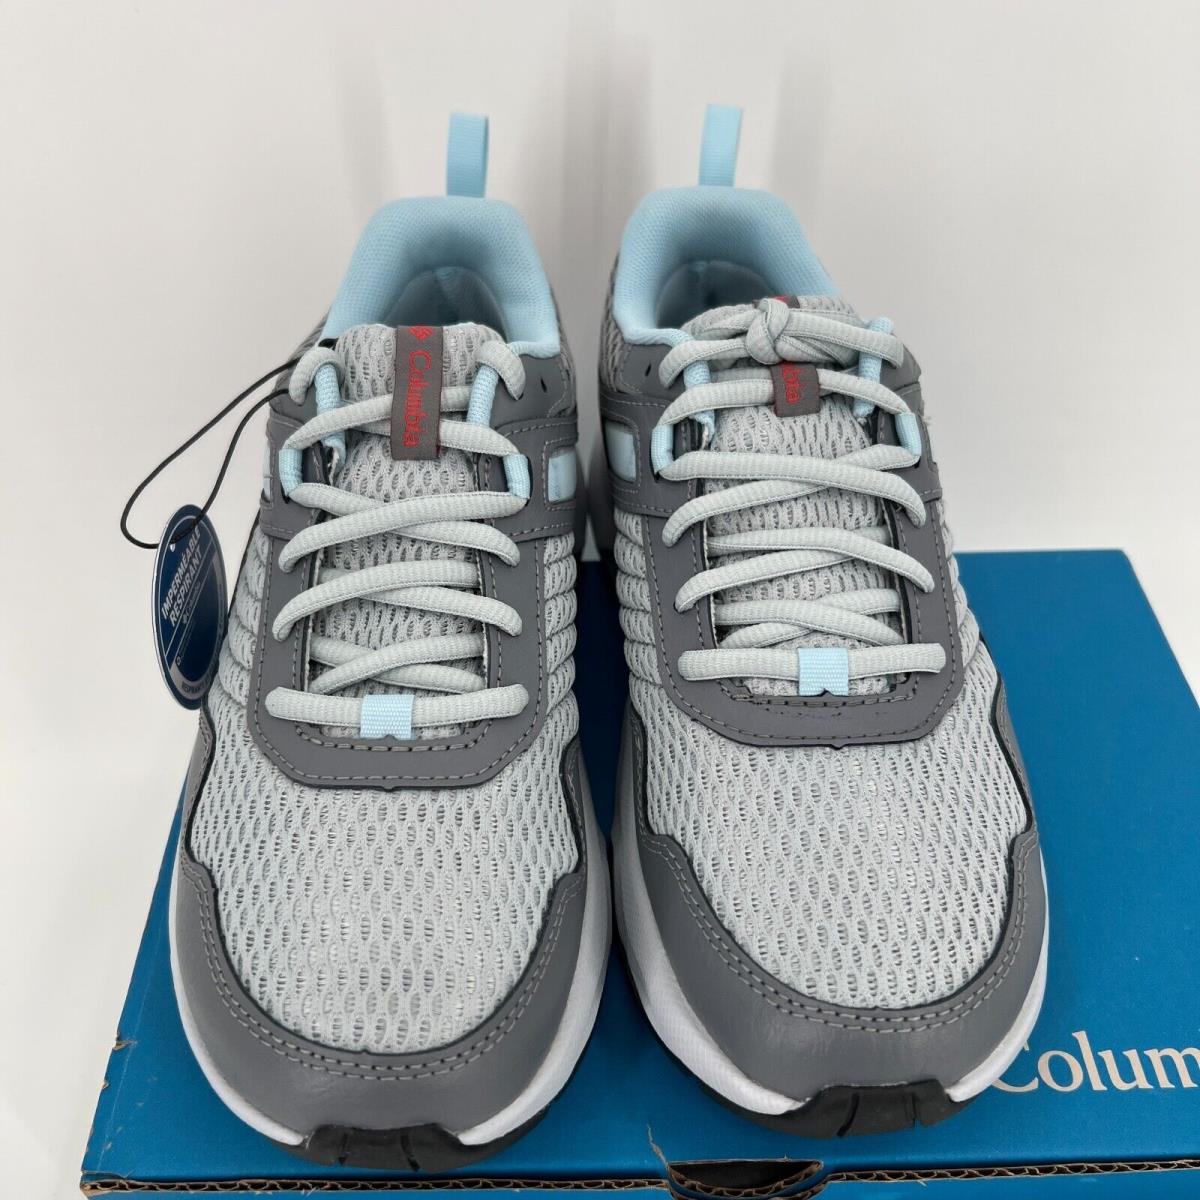 Columbia shoes Plateau - Gray 5